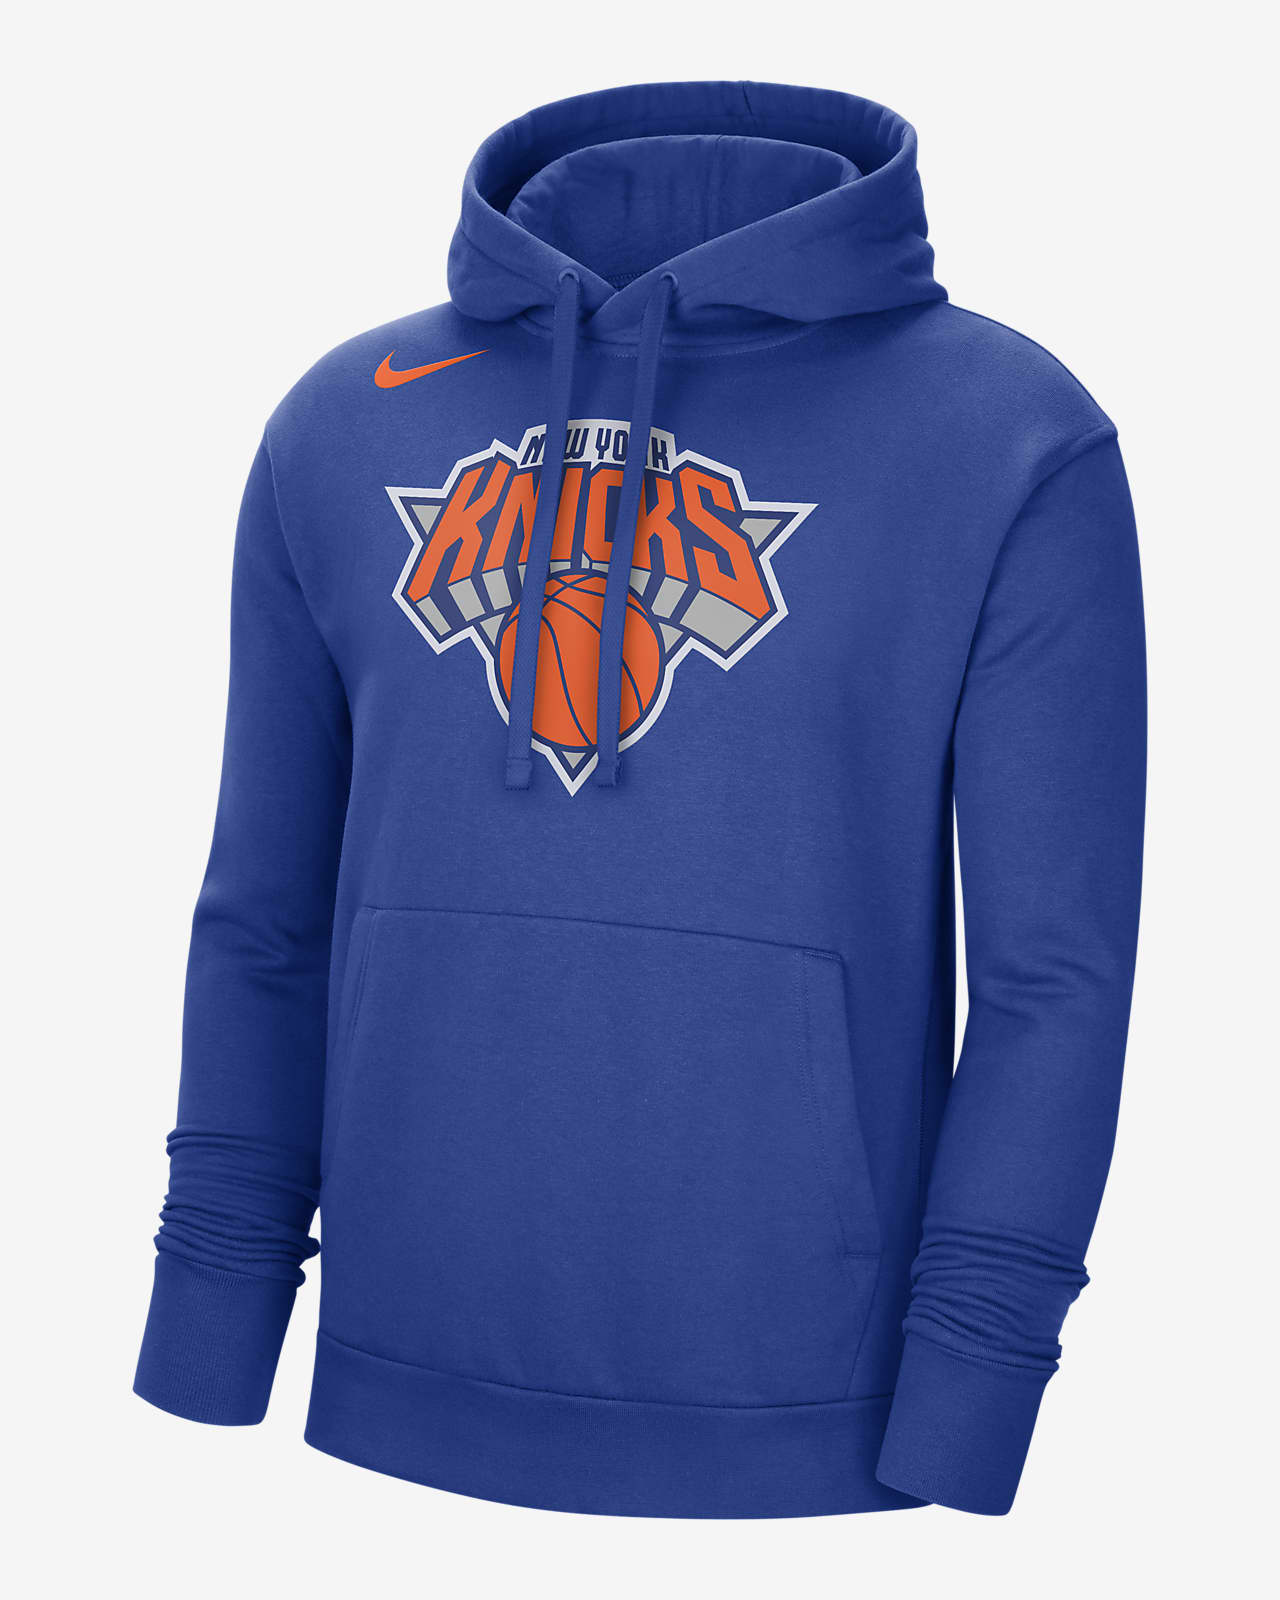 Sudadera con gorro sin cierre de tejido Fleece Nike NBA para New York Knicks. Nike.com